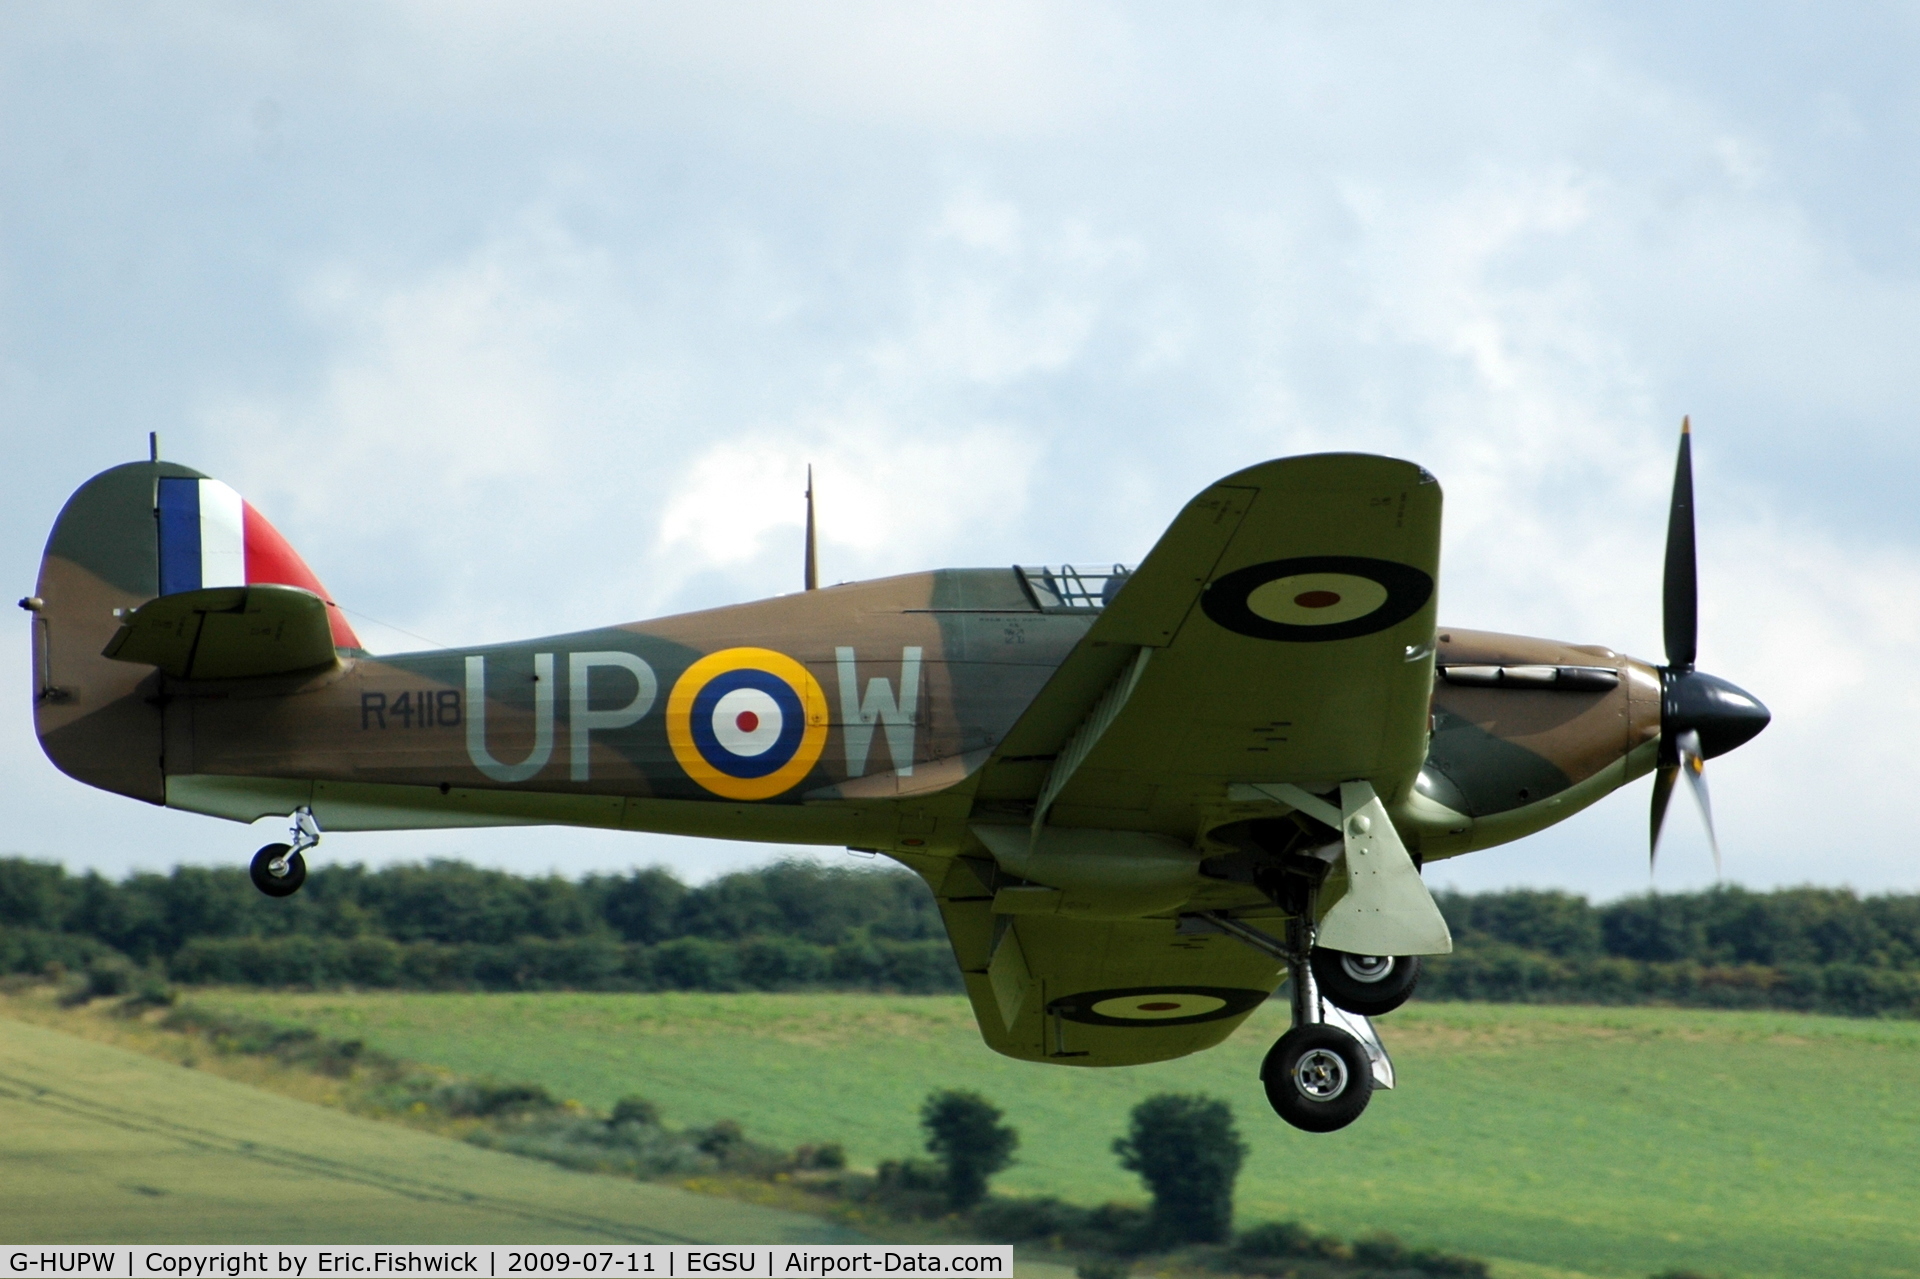 G-HUPW, 1940 Hawker Hurricane I C/N G592301, 44. R4118 at Duxford Flying Legends Air Show July 09